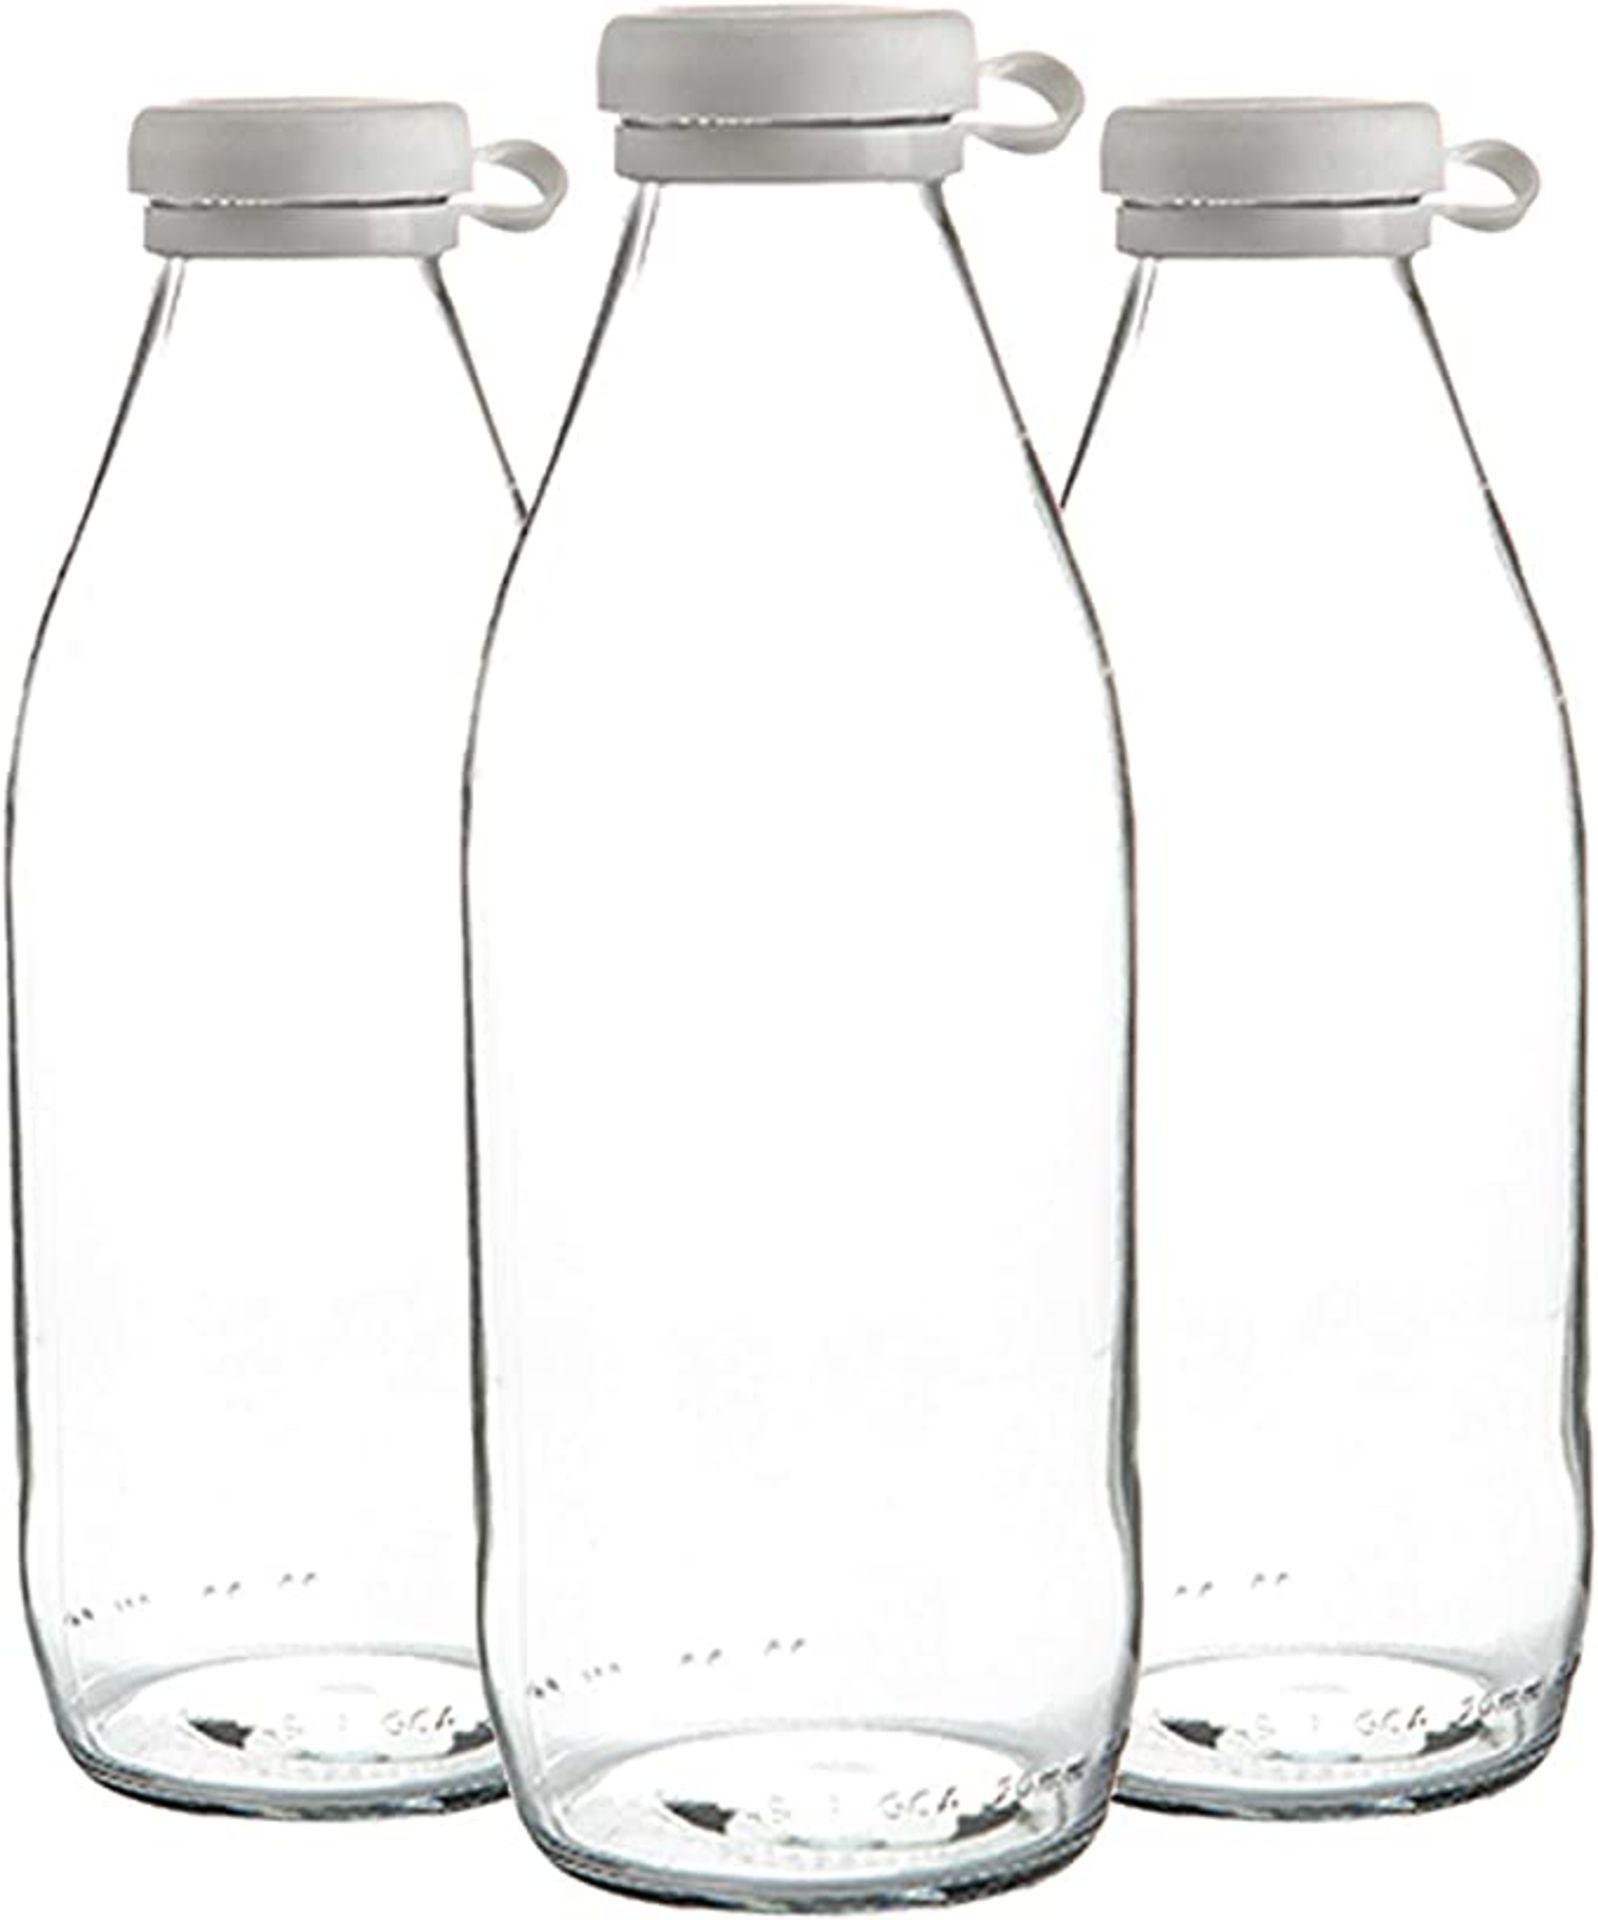 Argon Tableware Tallo Glass Bottles - Large Fridge Storage Serving Carafe Decanter for Water, Juice